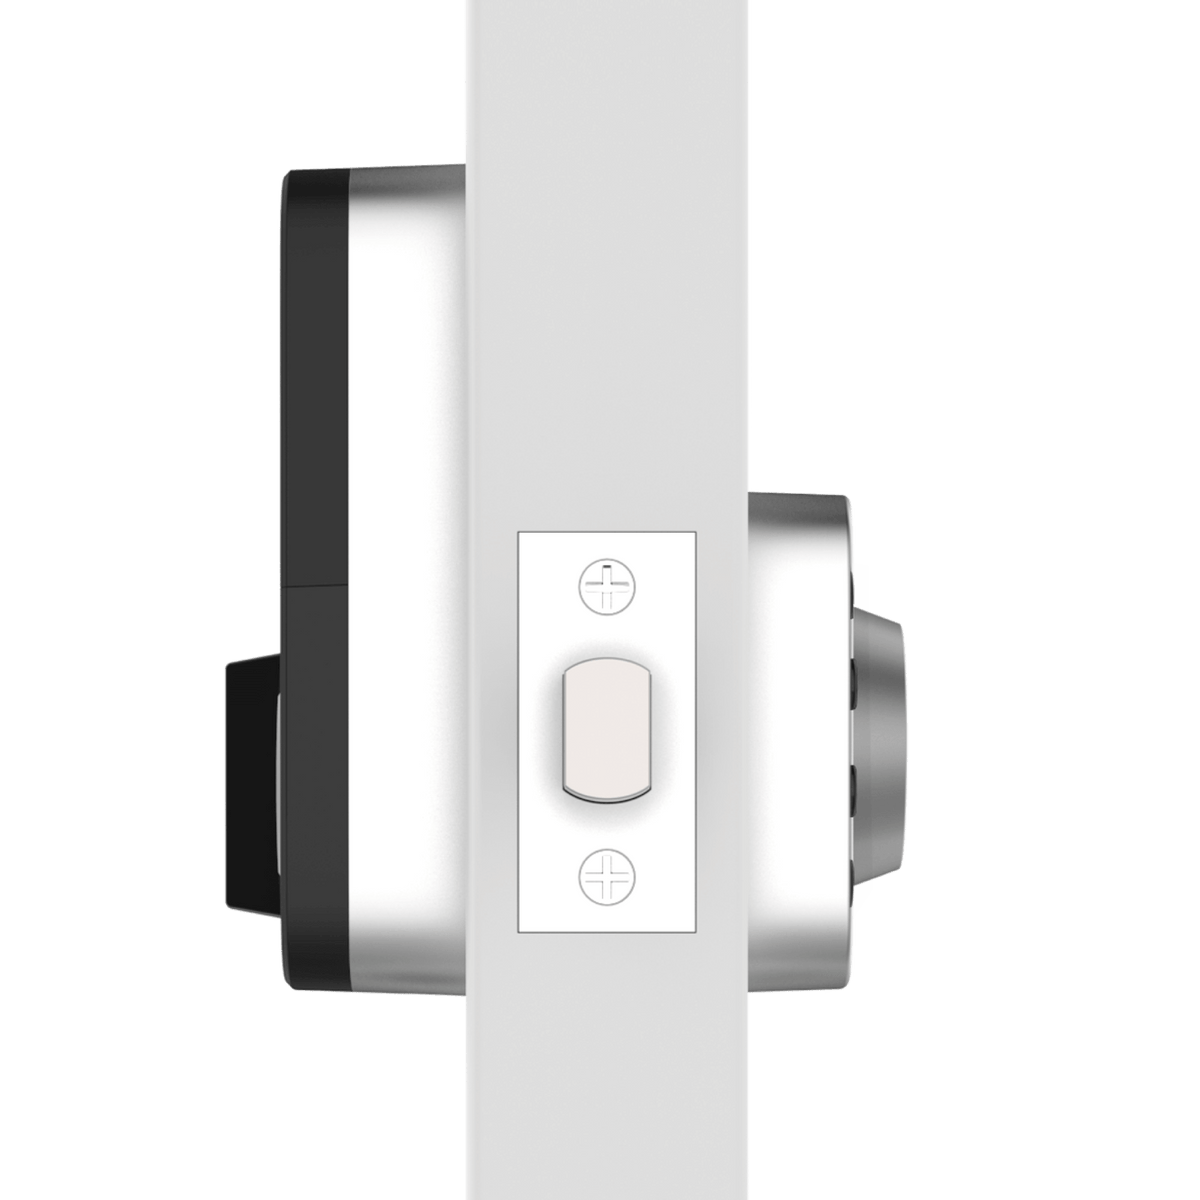 U-Tec U-BOLT-WIFI Bluetooth Enabled and Keypad Smart Deadbolt Door Lock in Satin Nickel New